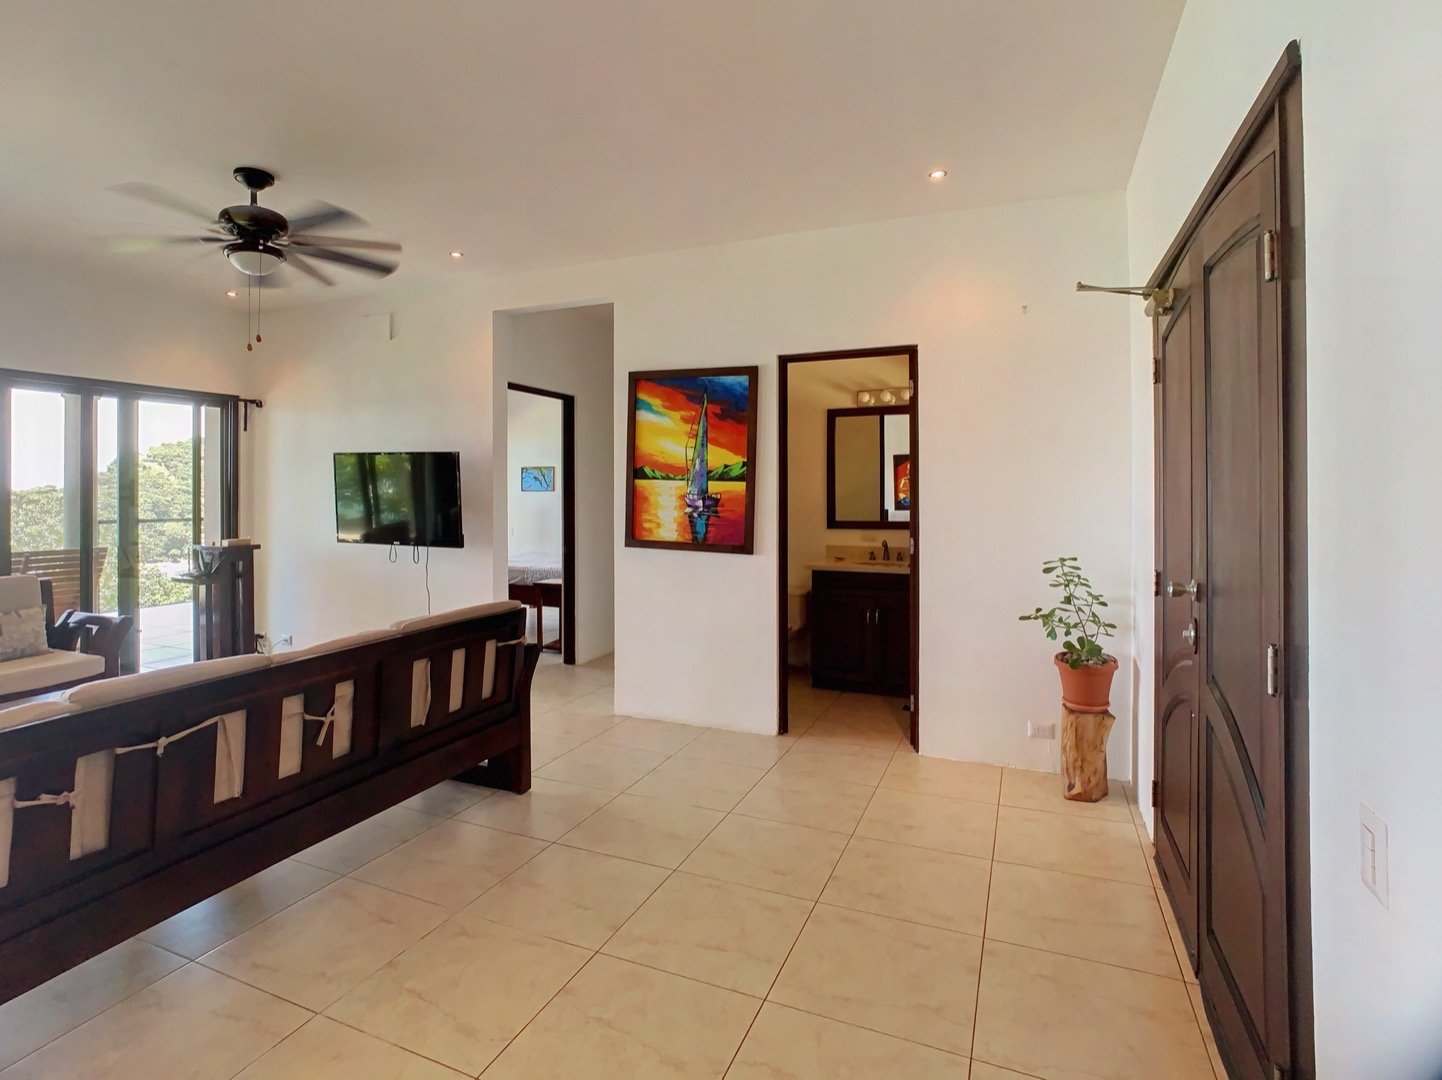 San Juan Del Sur Nicaragua Home on Two Acres For Sale 5.jpg